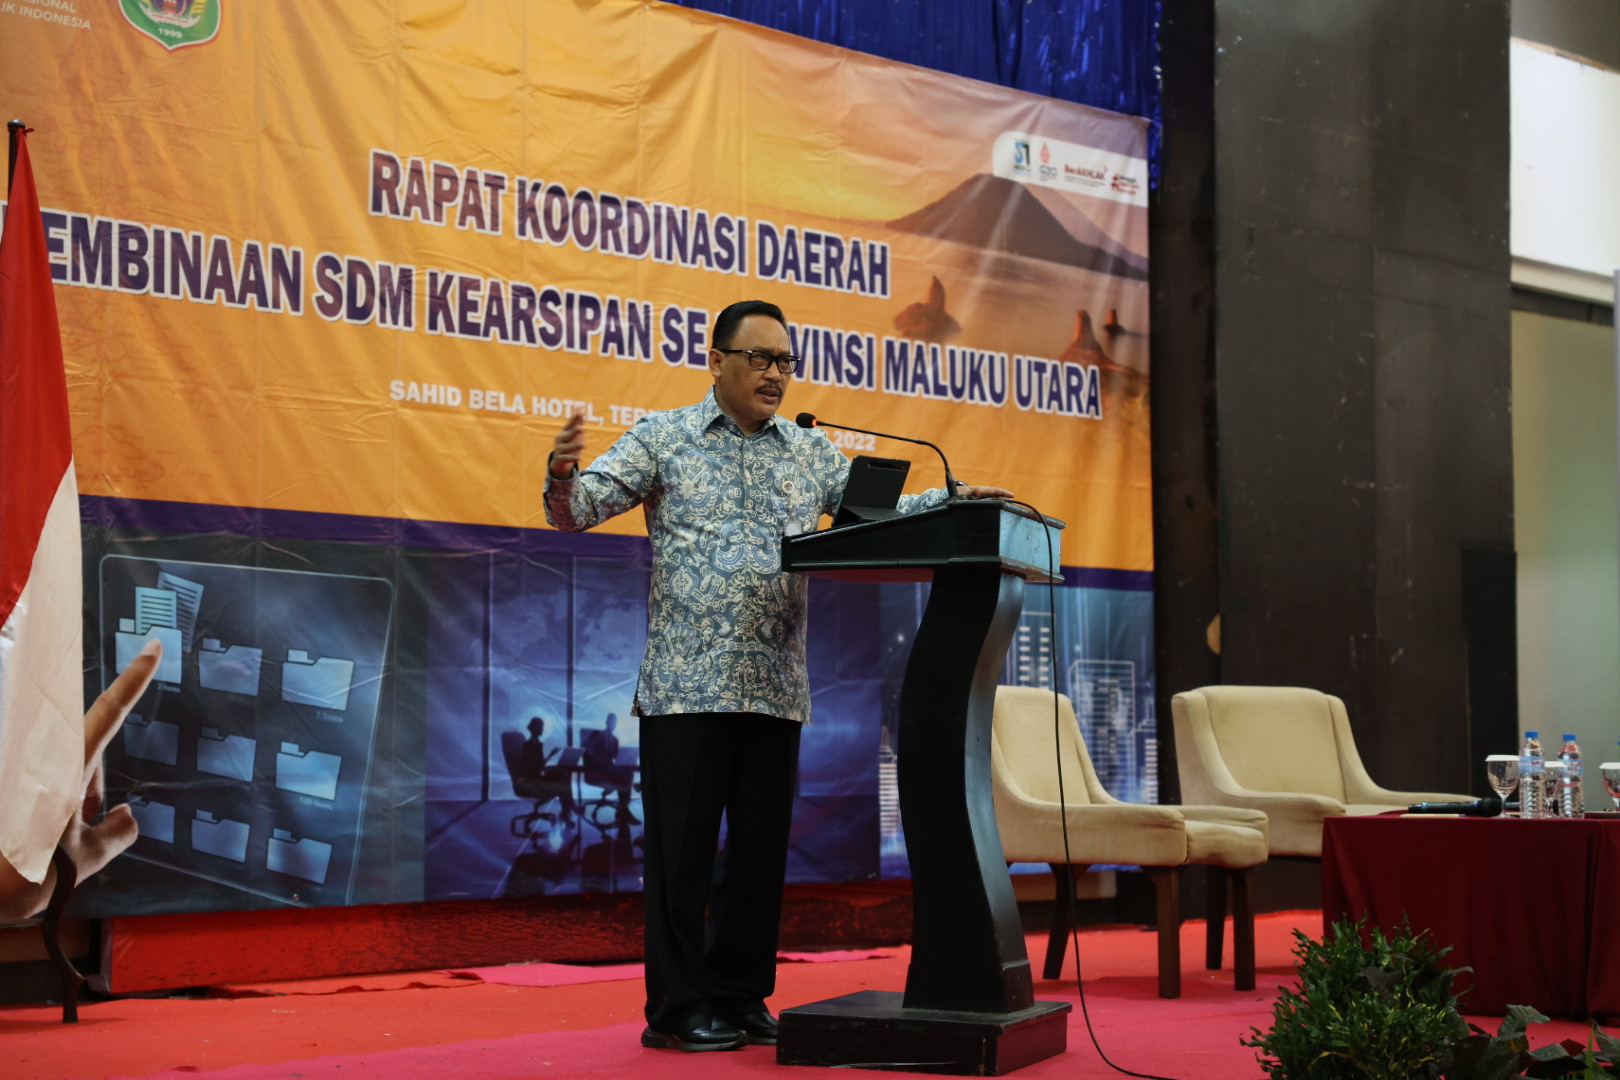 ANRI Gelar Rakorda Pembinaan SDM Kearsipan Se-Provinsi Maluku Utara